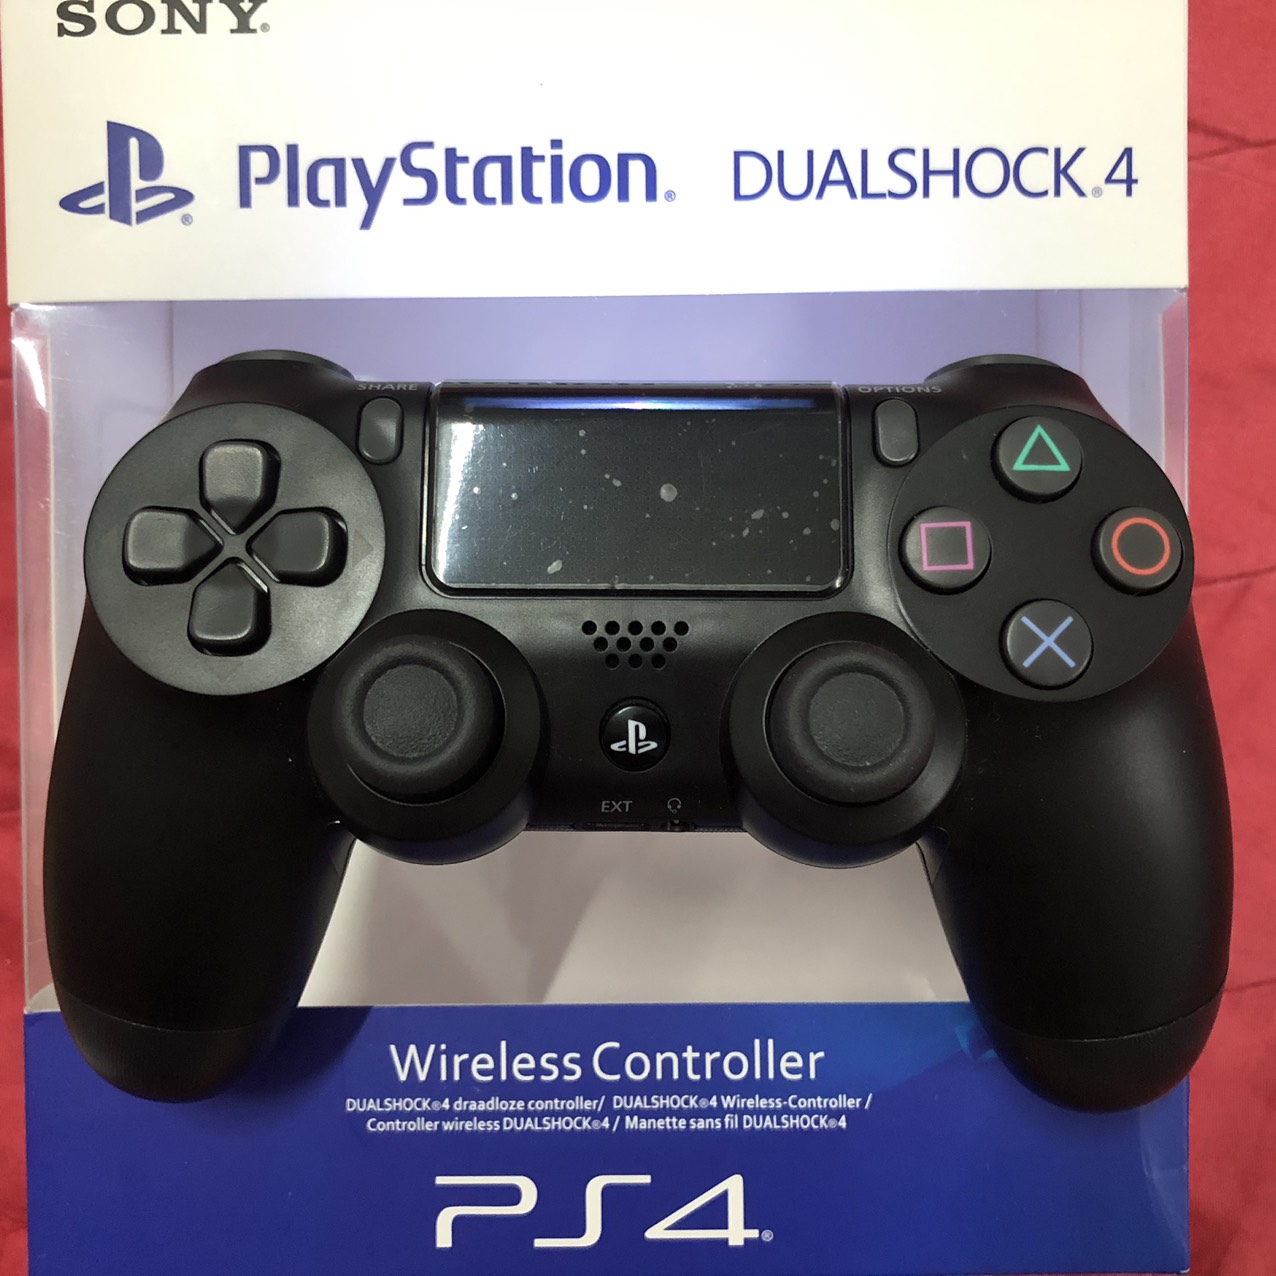 Tay cầm chơi game PS4 DualShock không dây bluetooth / PS4 Game Controller PS4 Dualshock wireless bluetooth dùng cho máy PS4, PC/Laptop, Smartphone/Tablet, SmartTV -A&T Stores